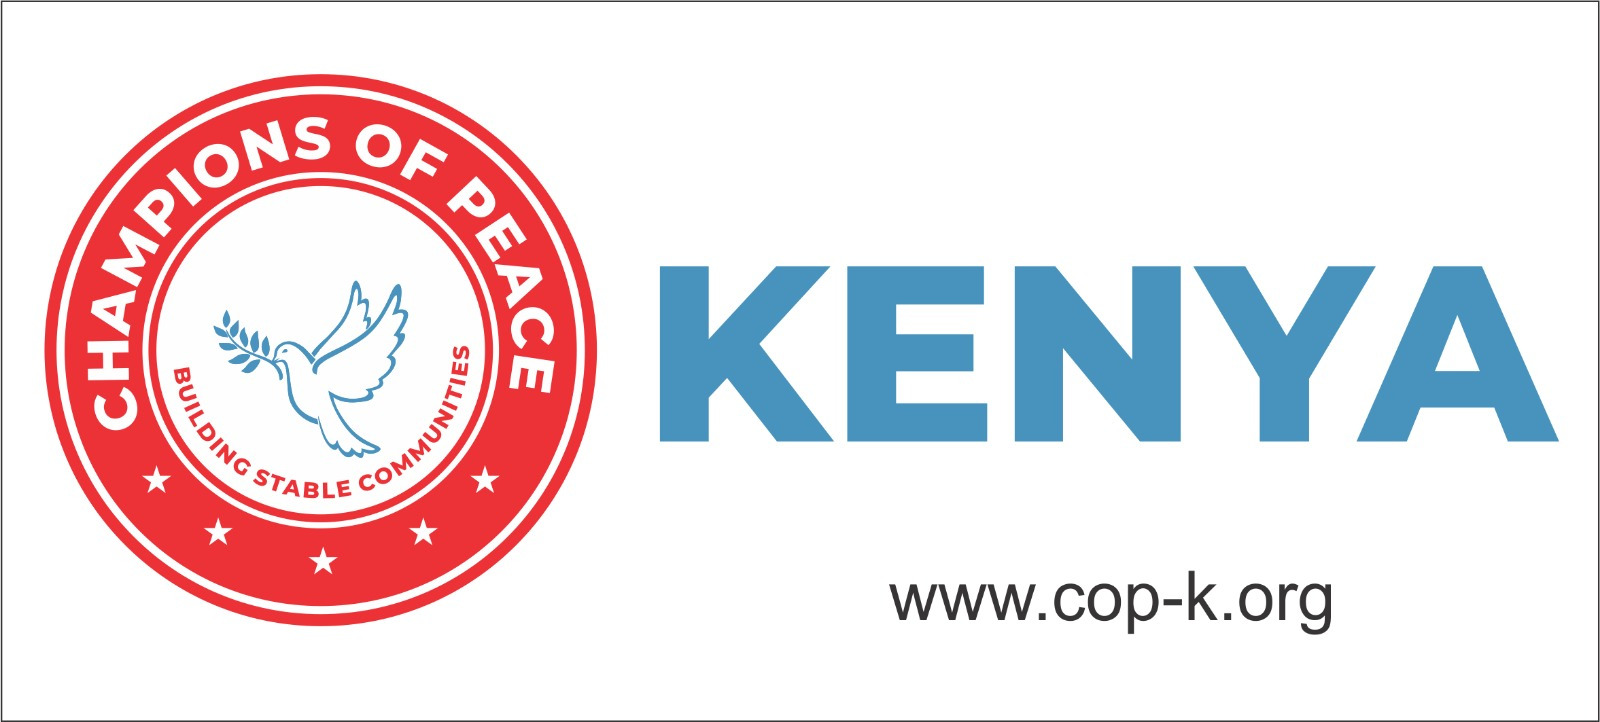 Champions of Peace Kisumu Kenya logo